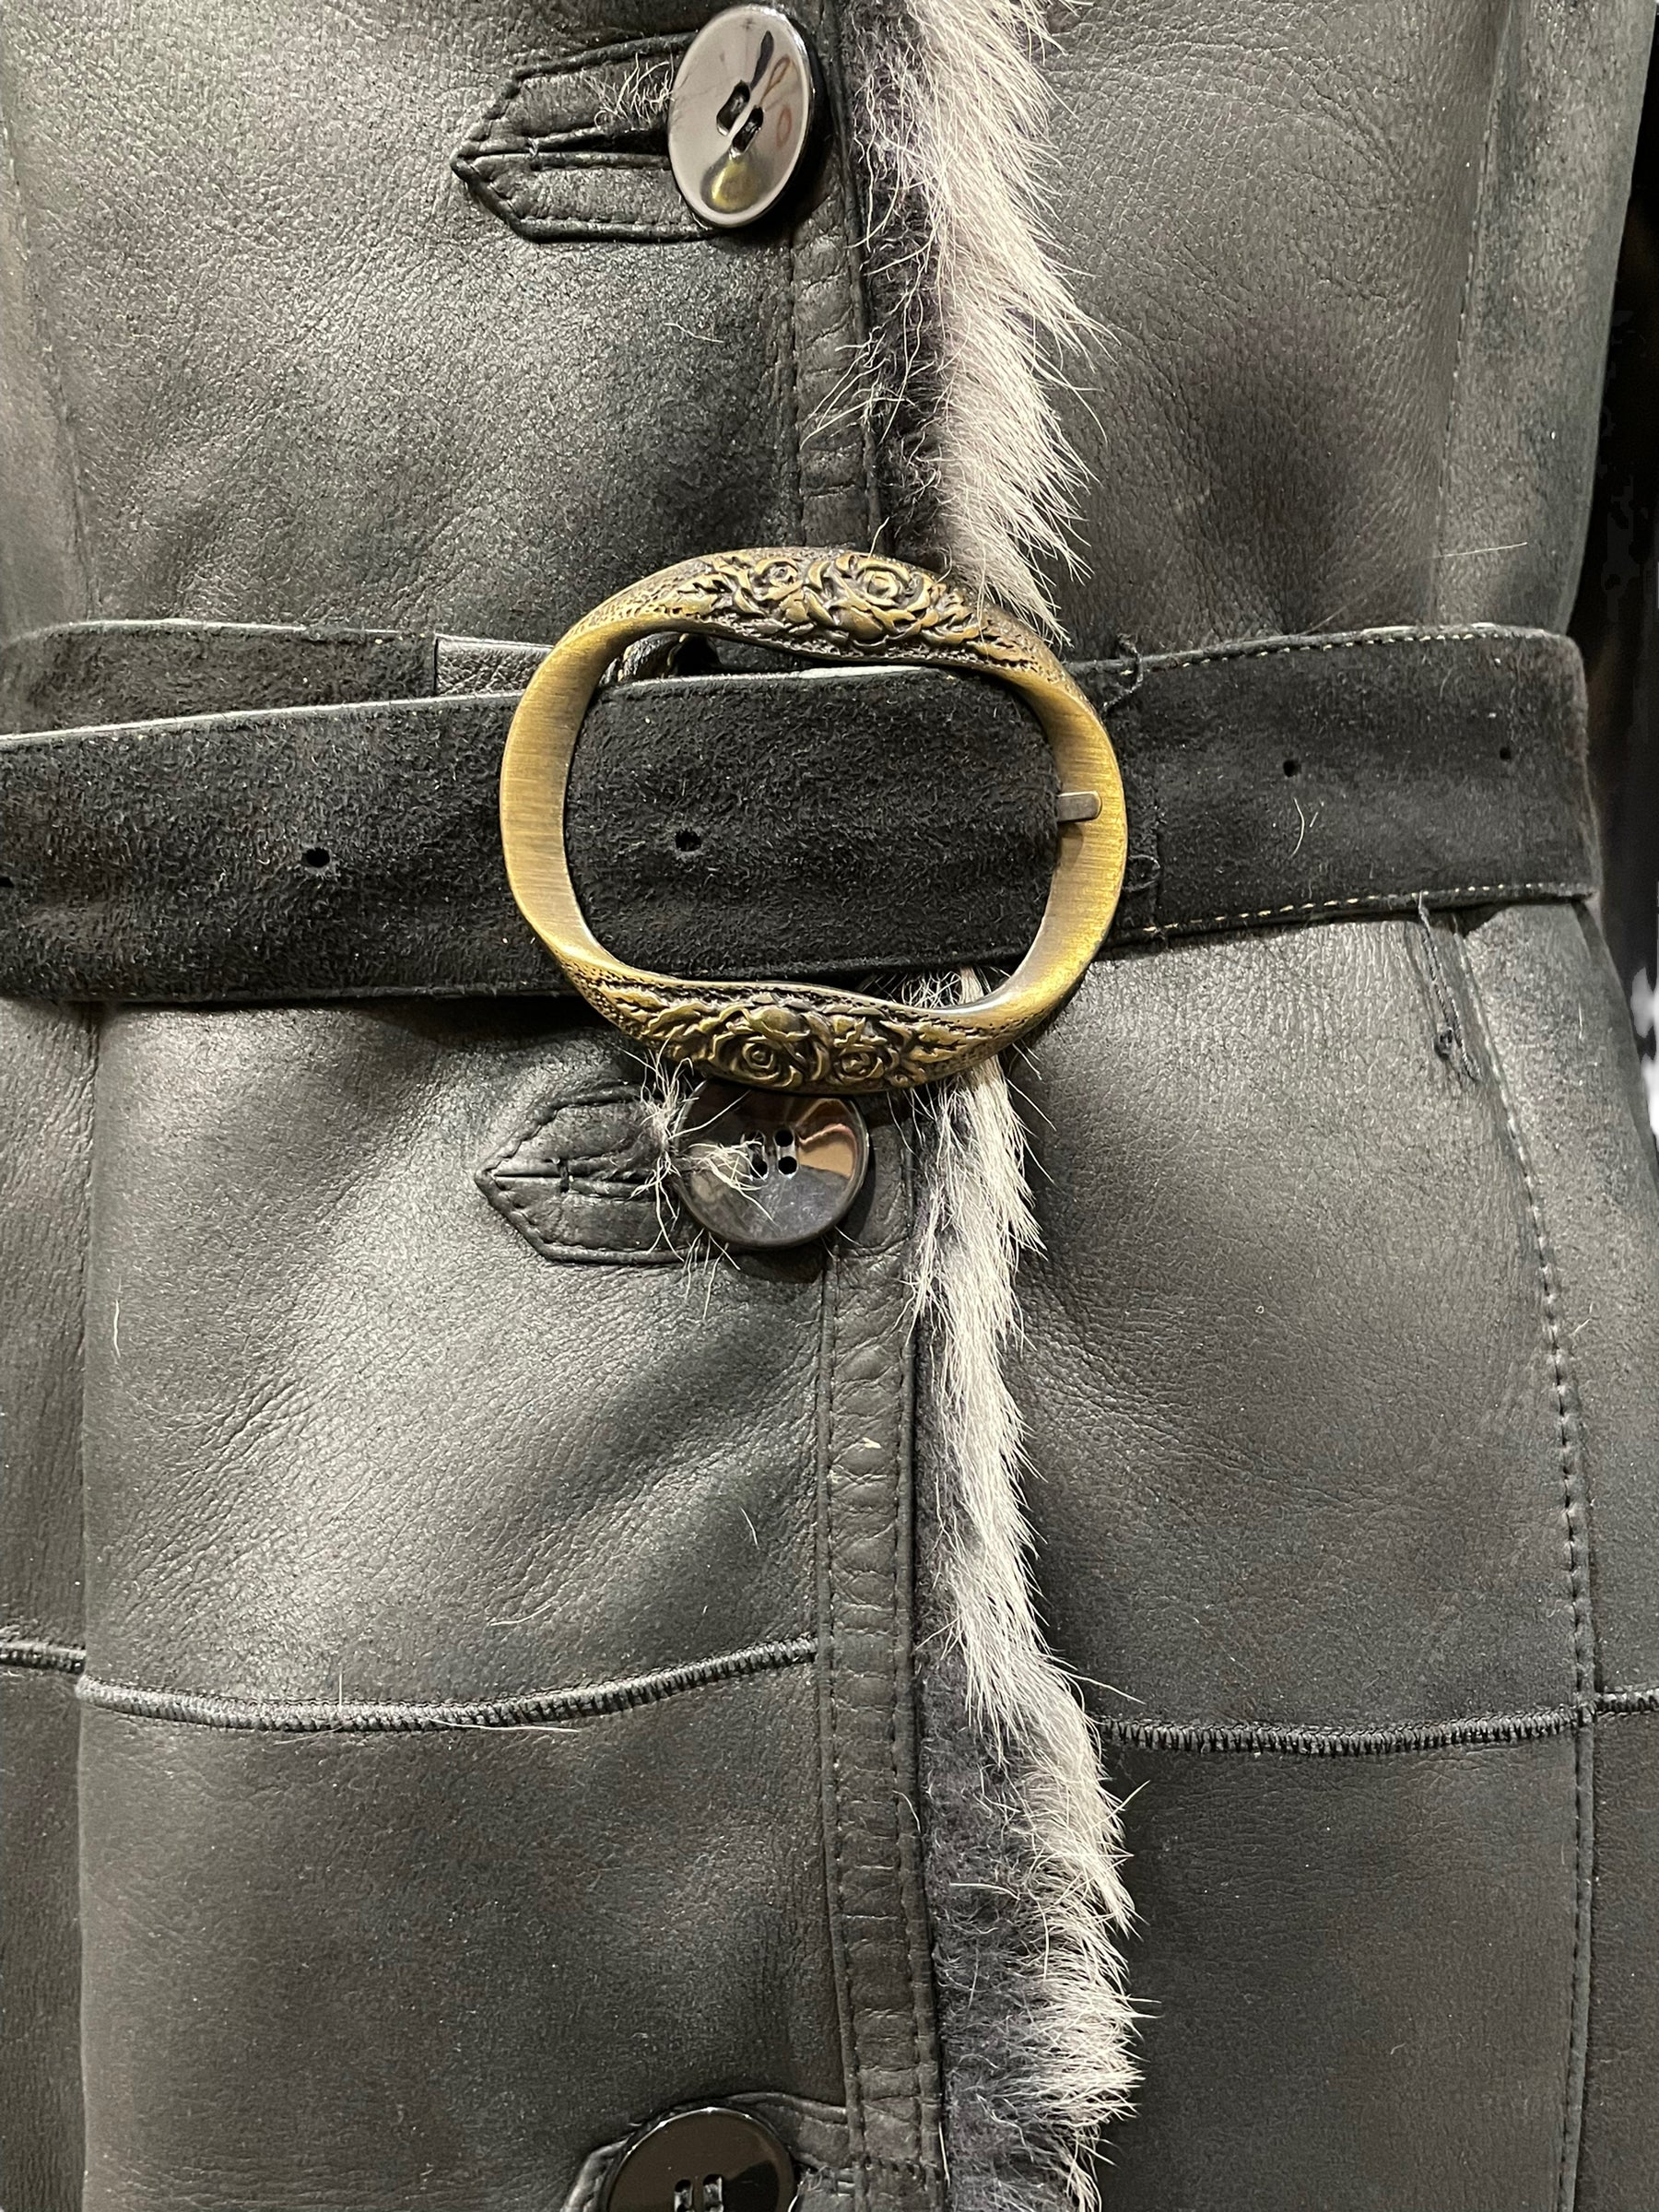 Vintage Original Shearling and Fur Jacket - Size Small